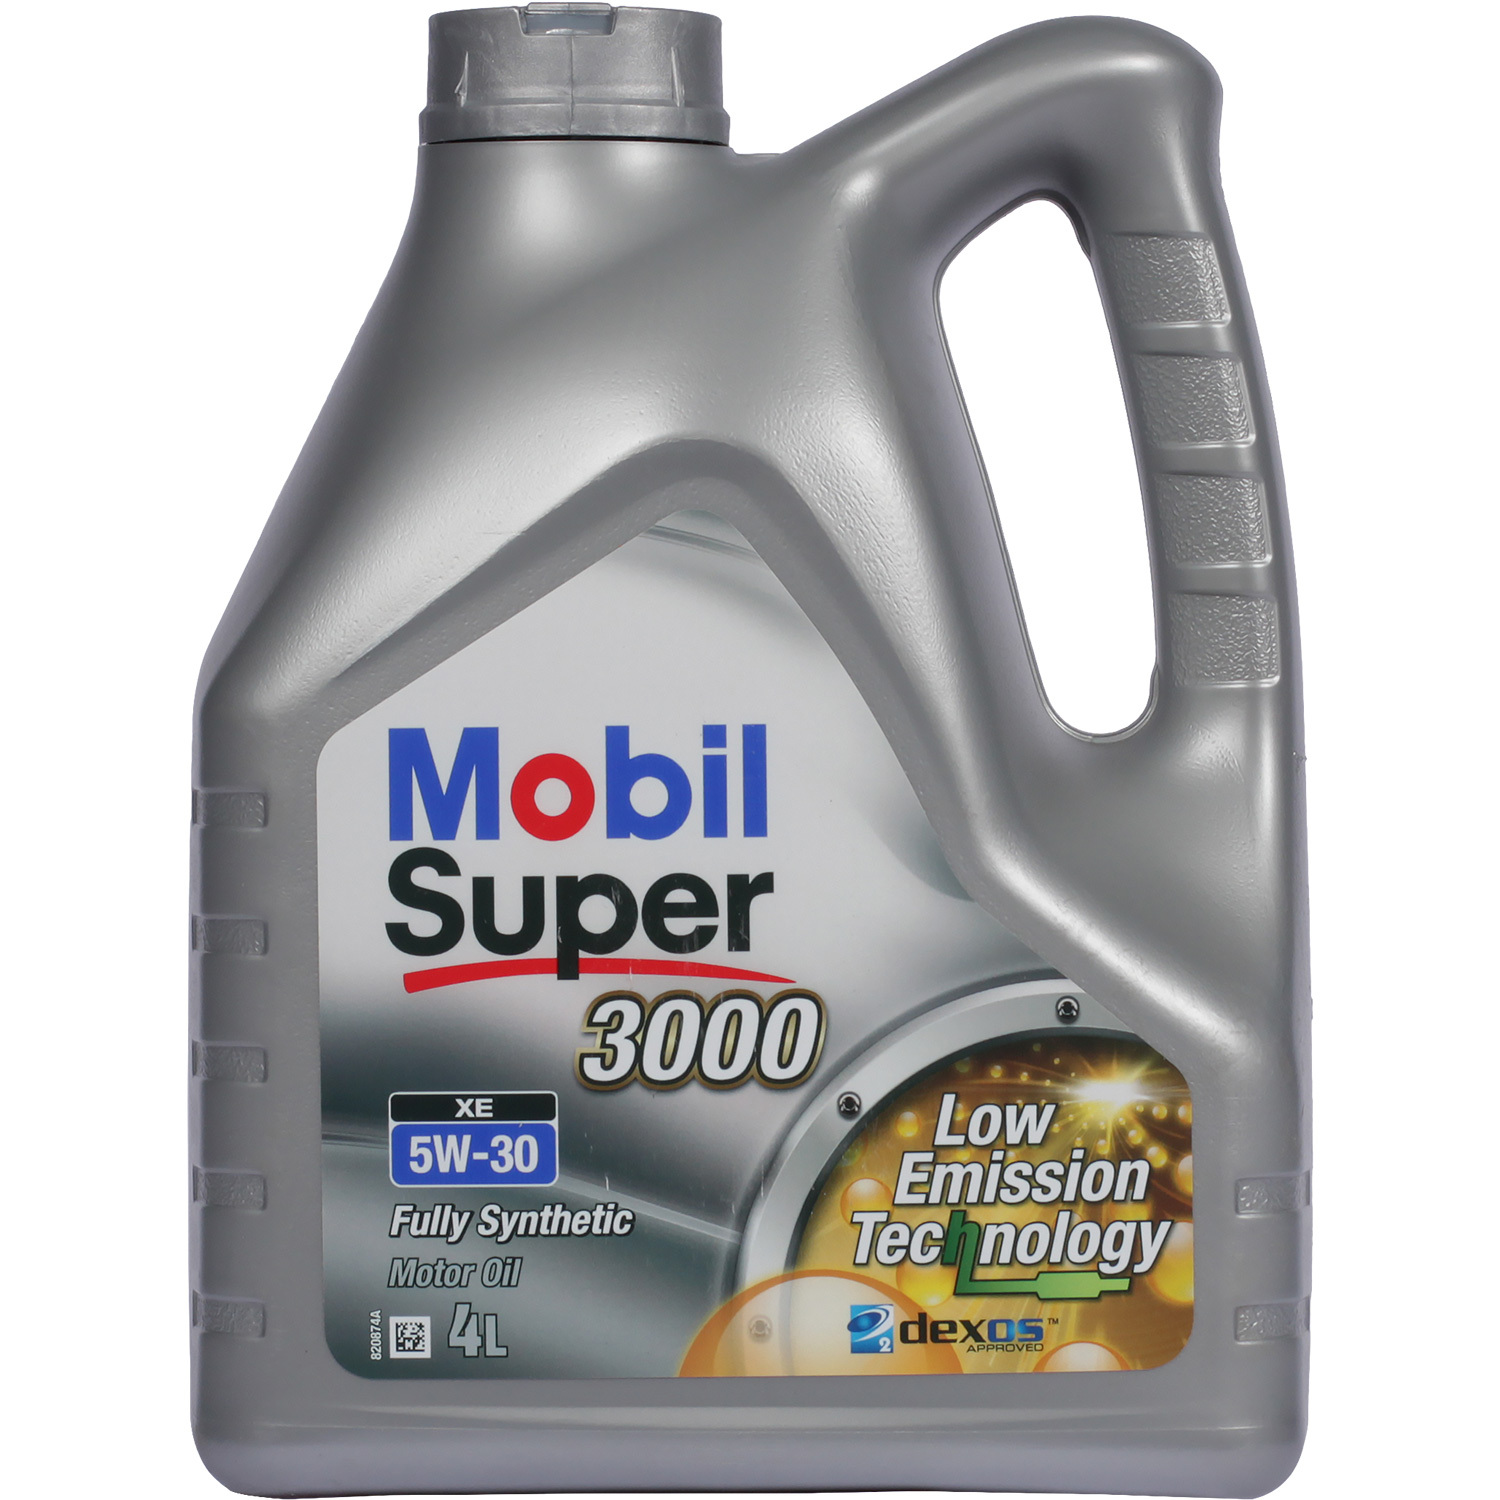 Mobil Моторное масло Mobil Super 3000 XE 5W-30, 4 л масло моторное mobil 1 esp formula 5w 30 1 л